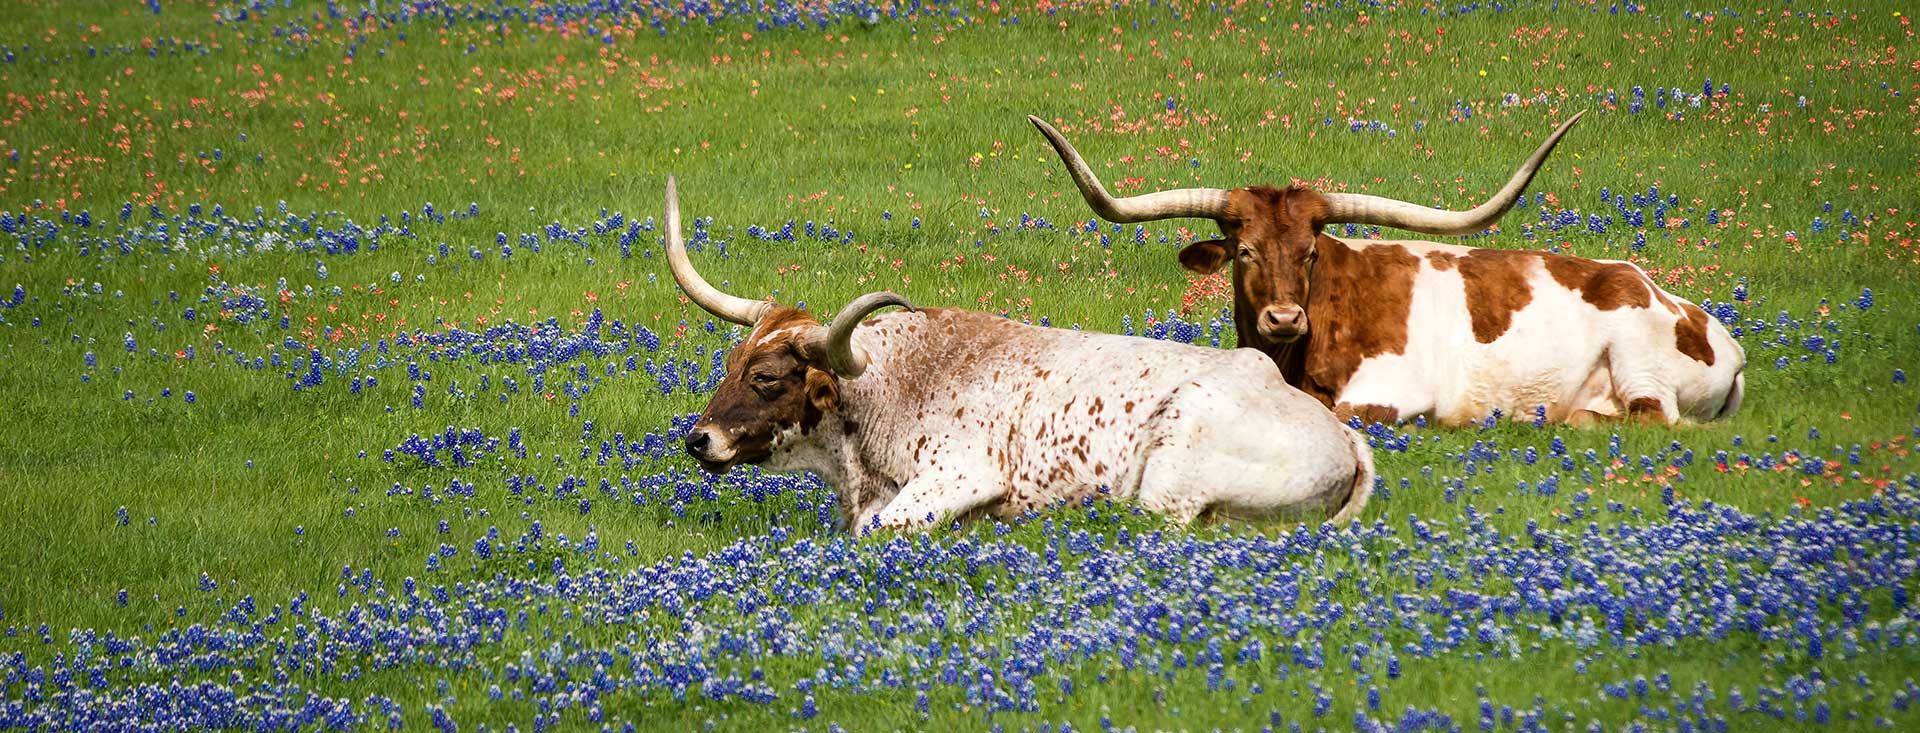 Two bulls sitting in a grassy field